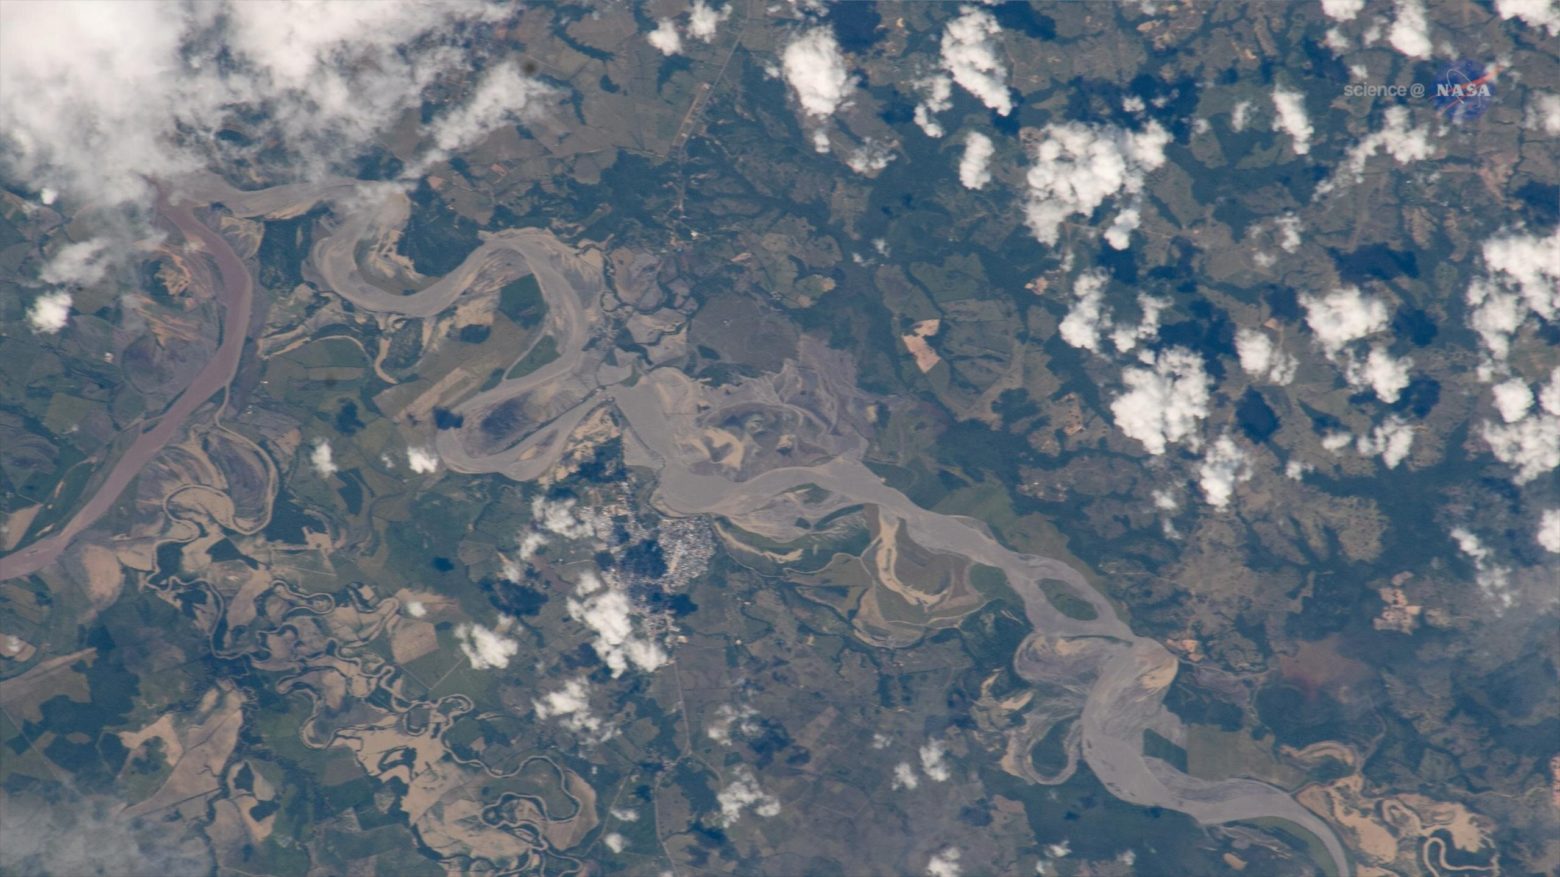 Снимок космоса НАСА